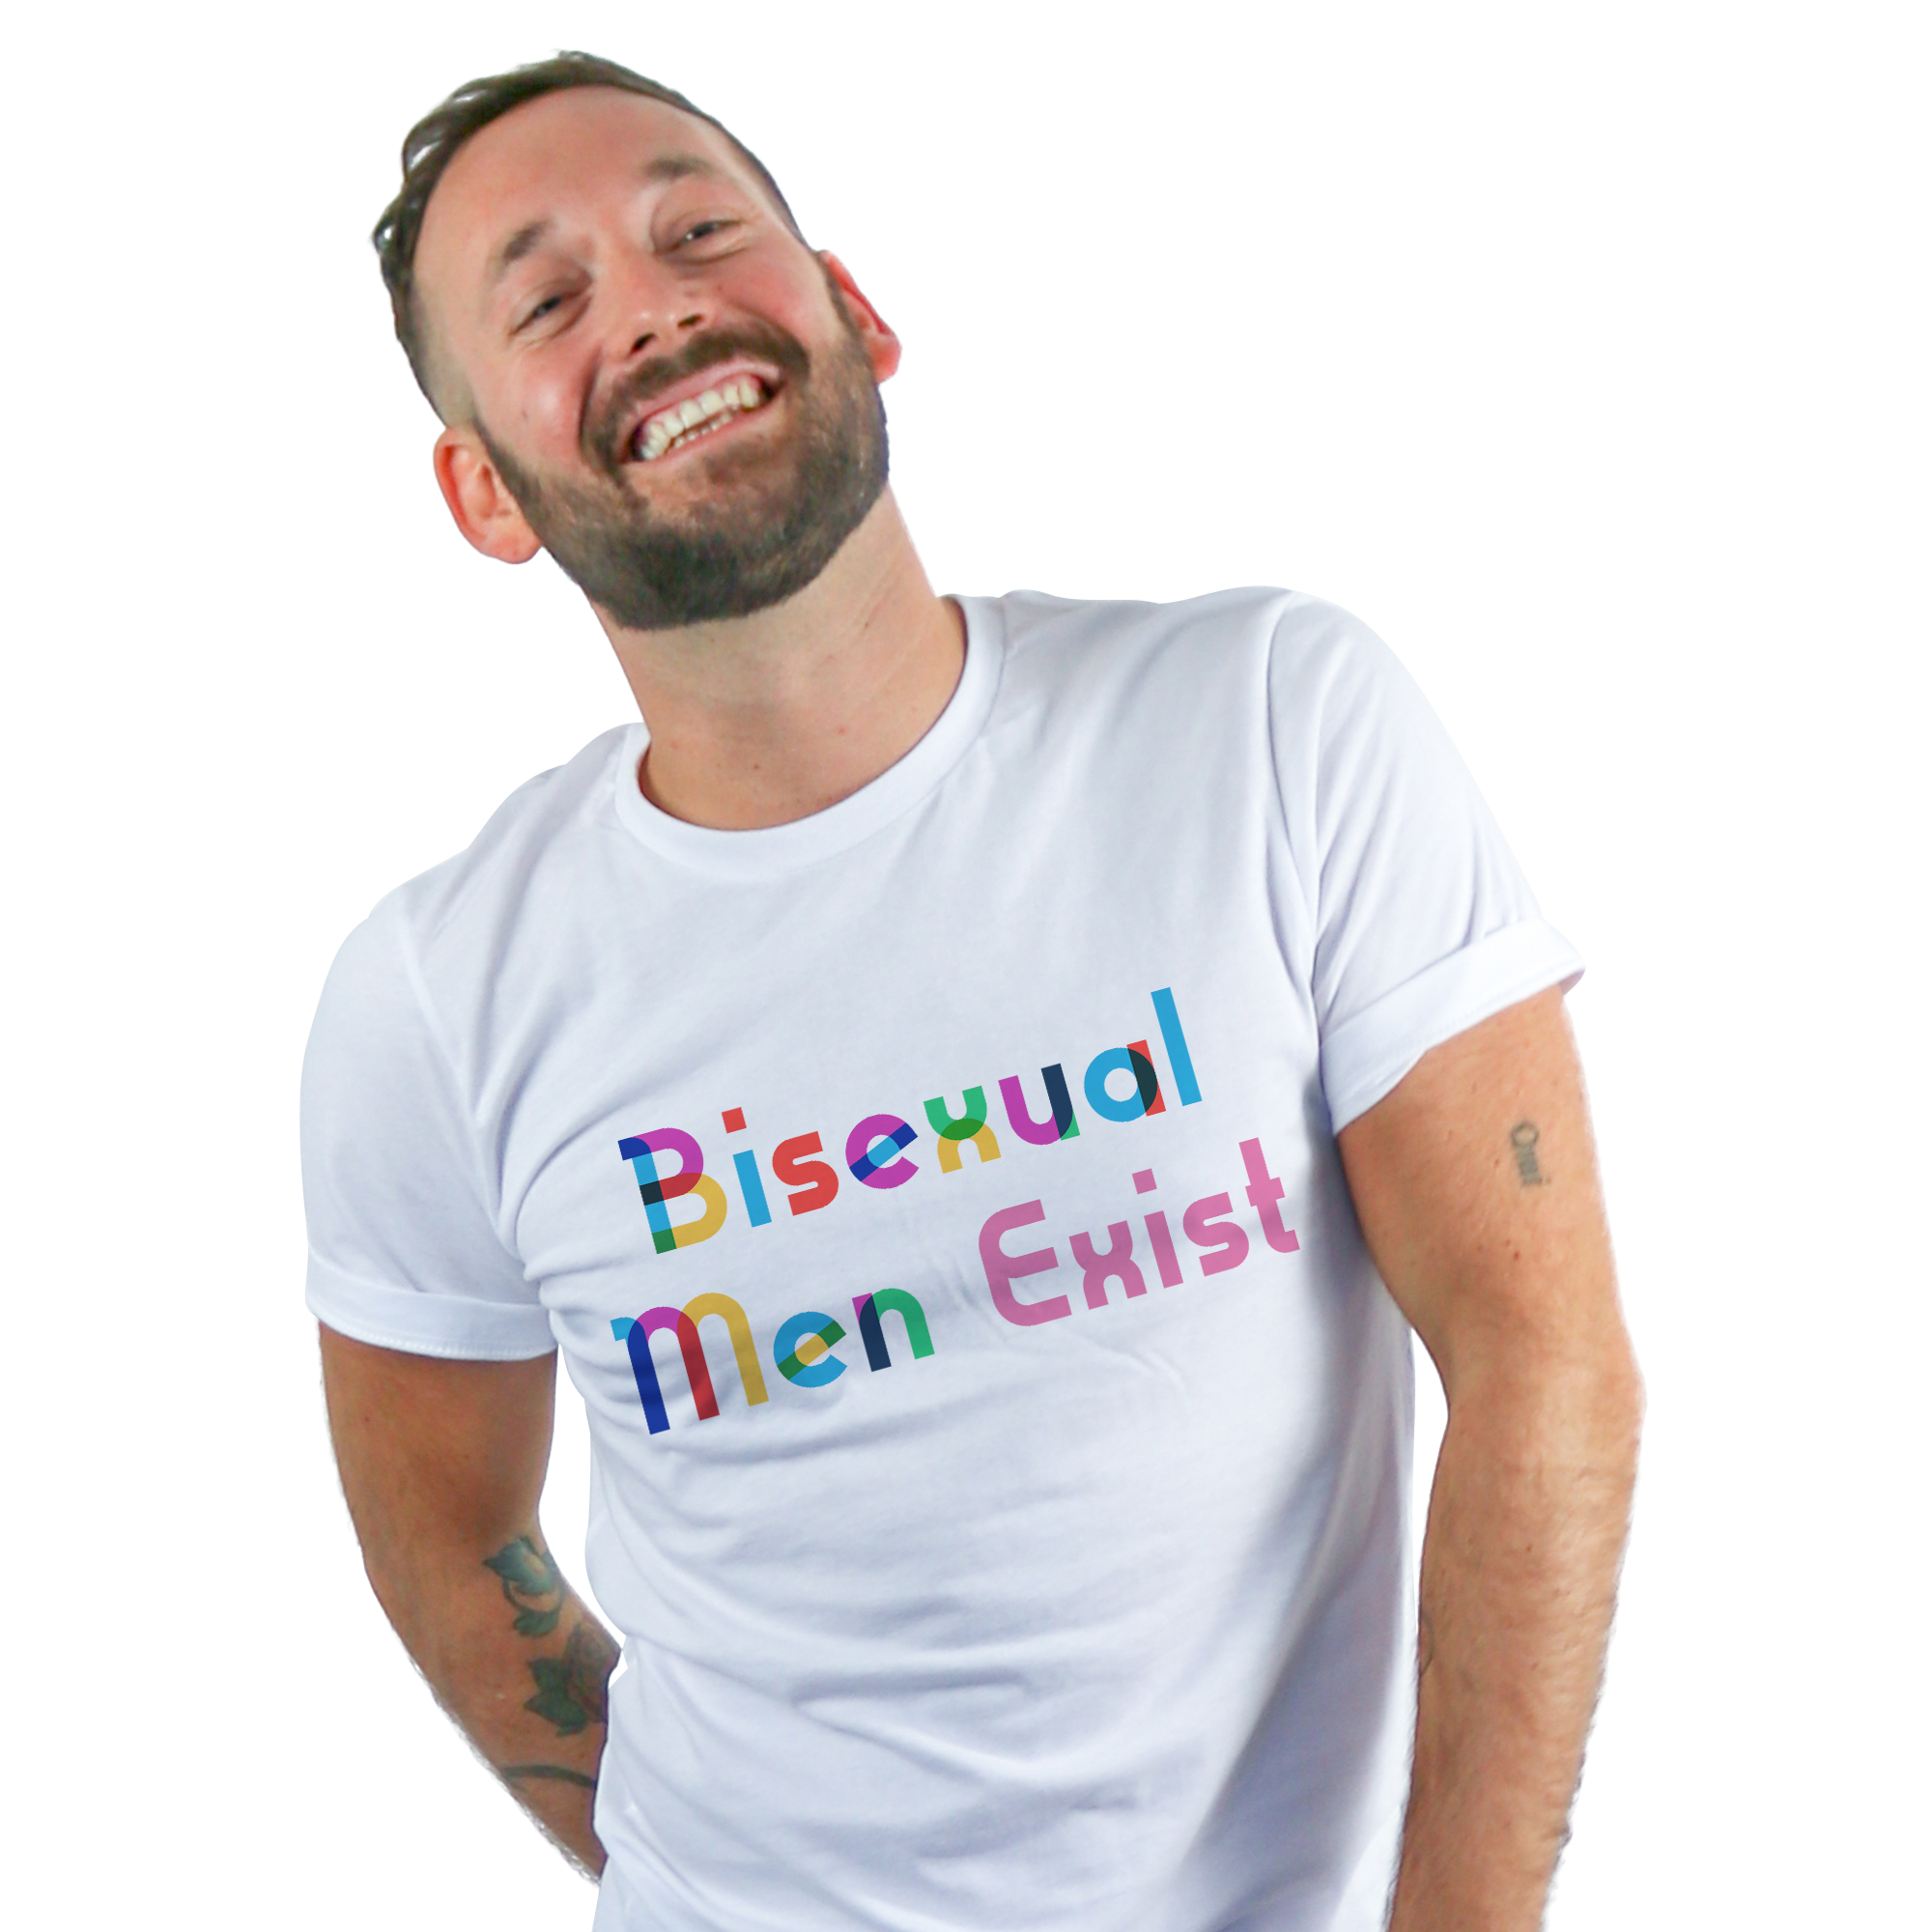 Bisexual men exist t-shirt PinkNews